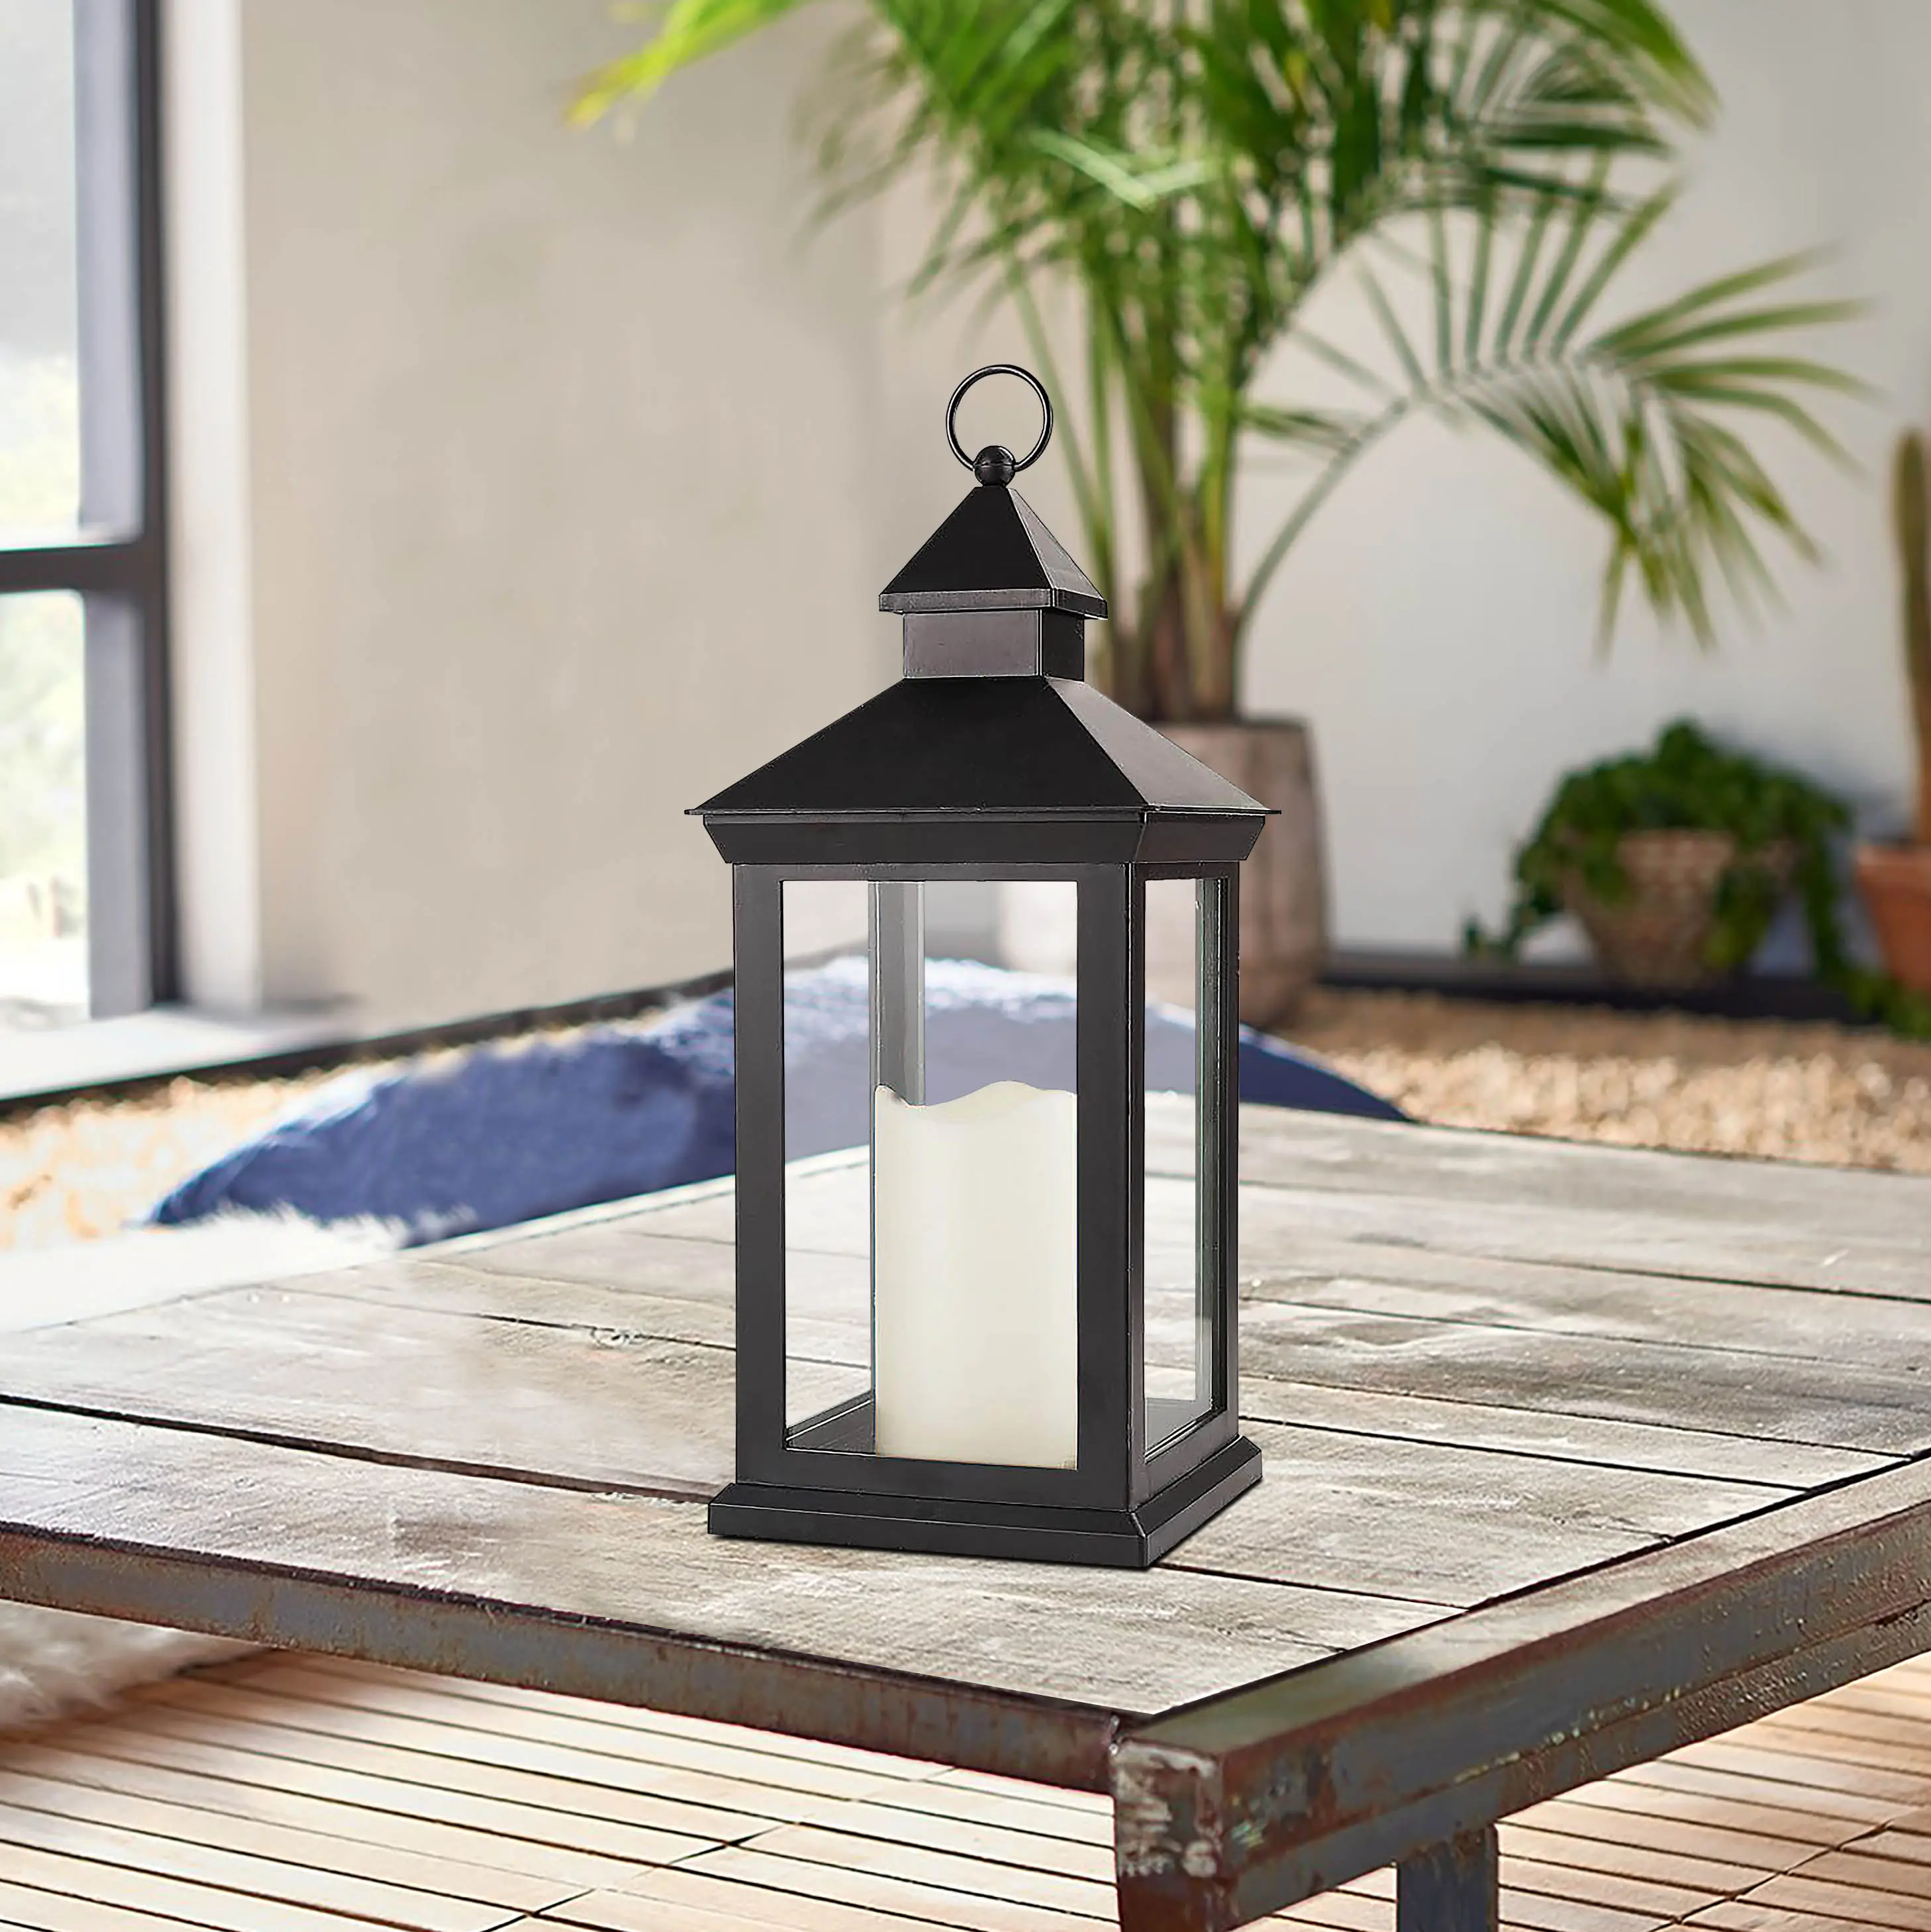 JHD0200225 Modern style cheap Home decorative lantern plastic lantern